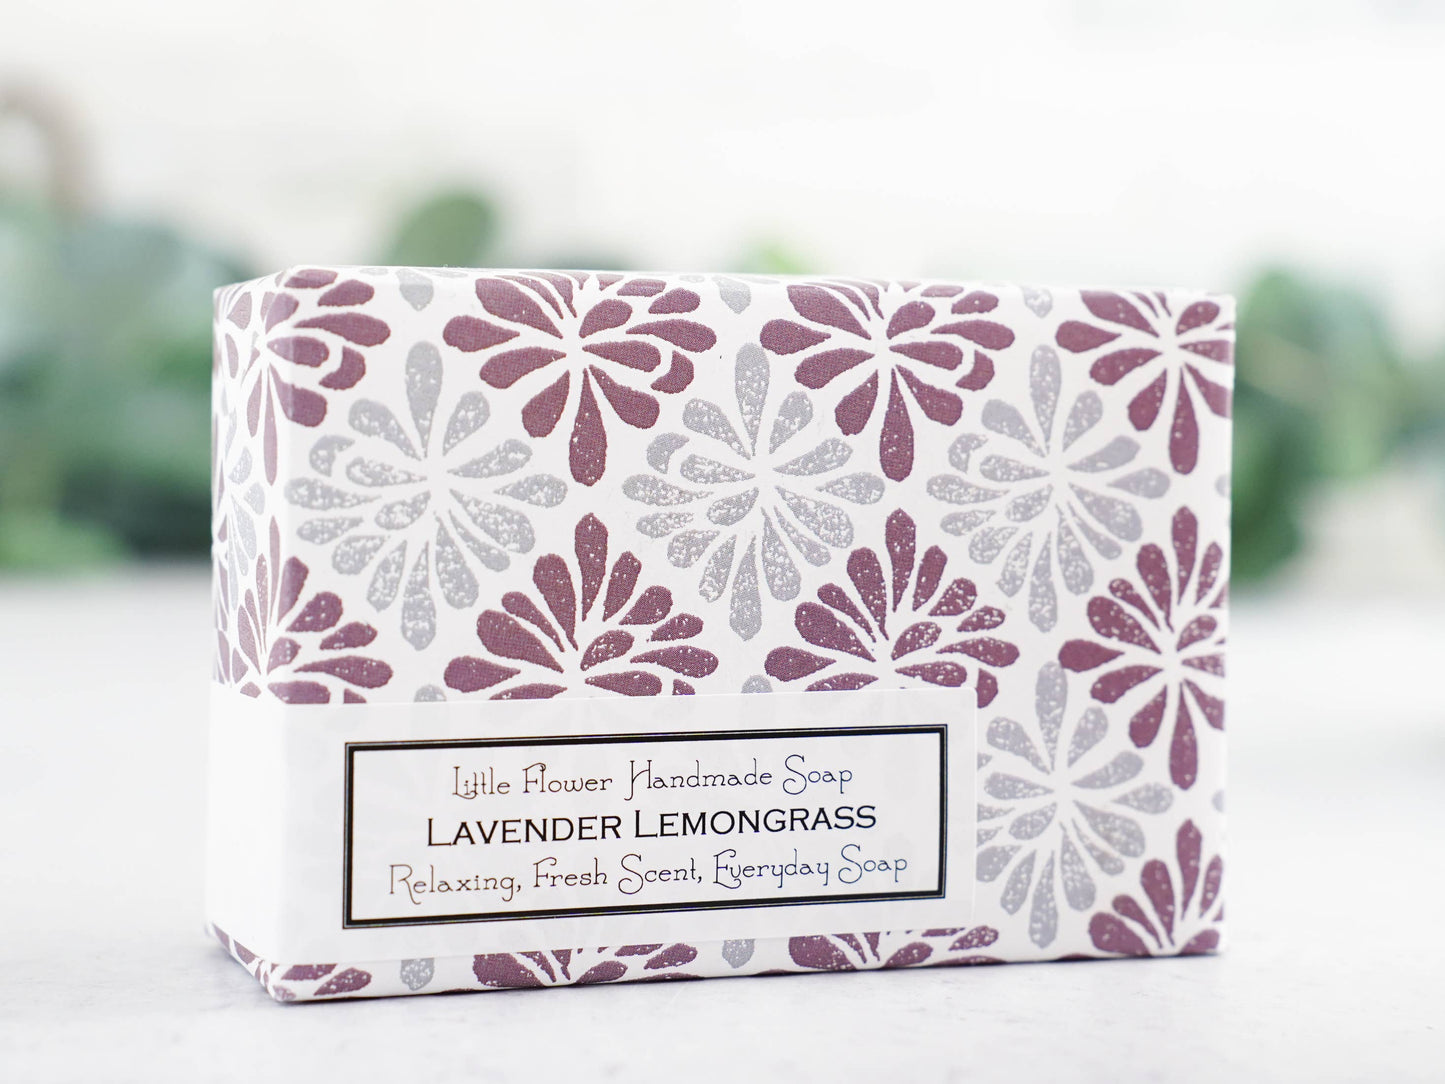 Lavender Lemongrass Handmade Soap: 3.5 oz